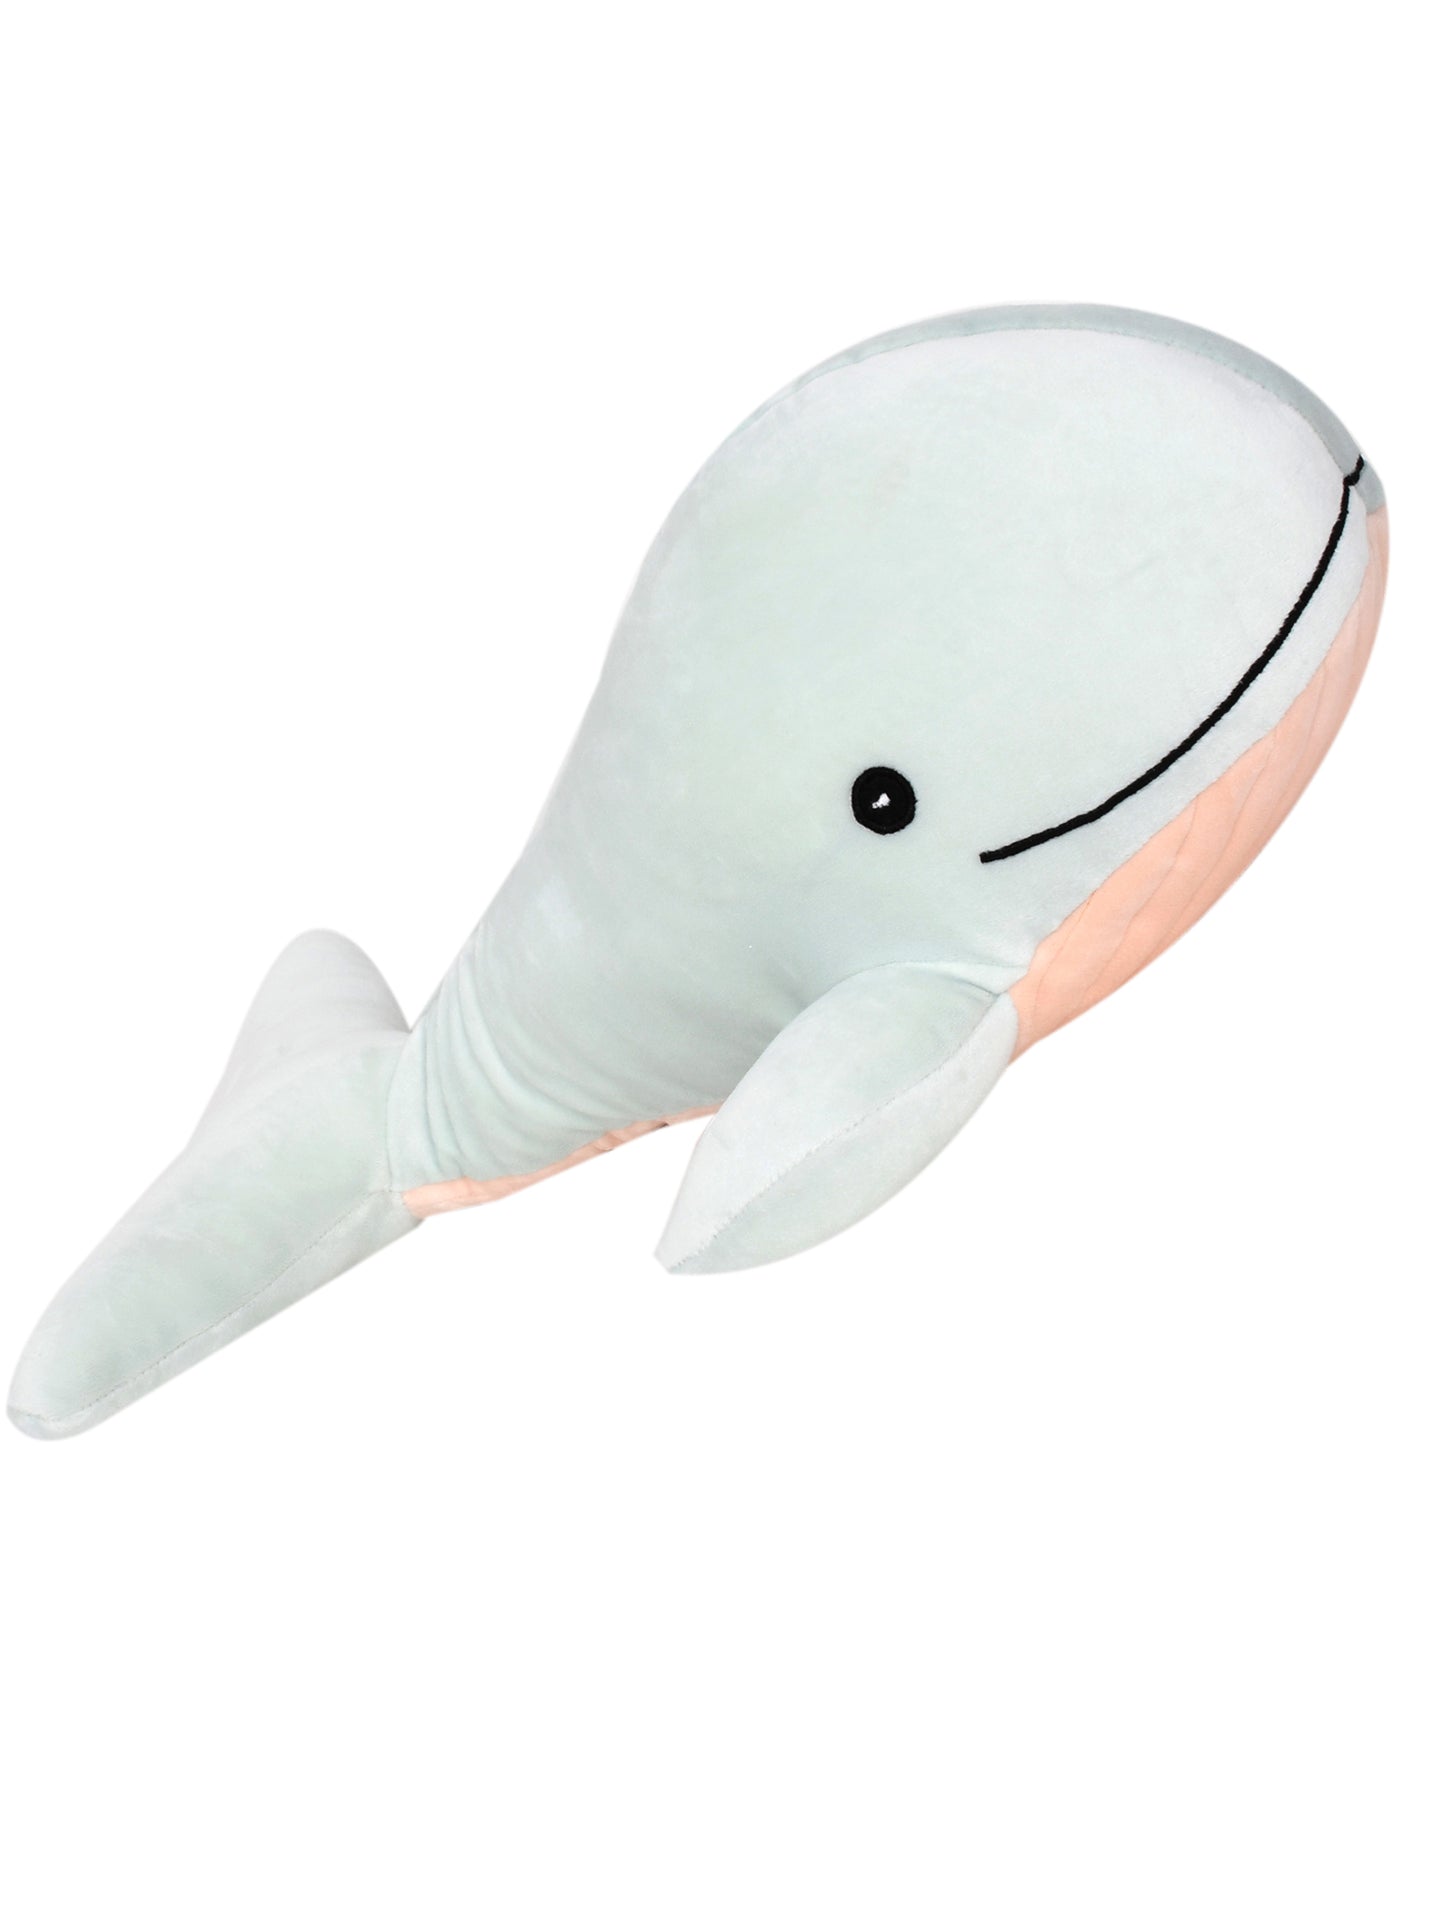 Mirada Big Floppy Plush Stuffed Whale Soft Toy -Cyan(47cm)